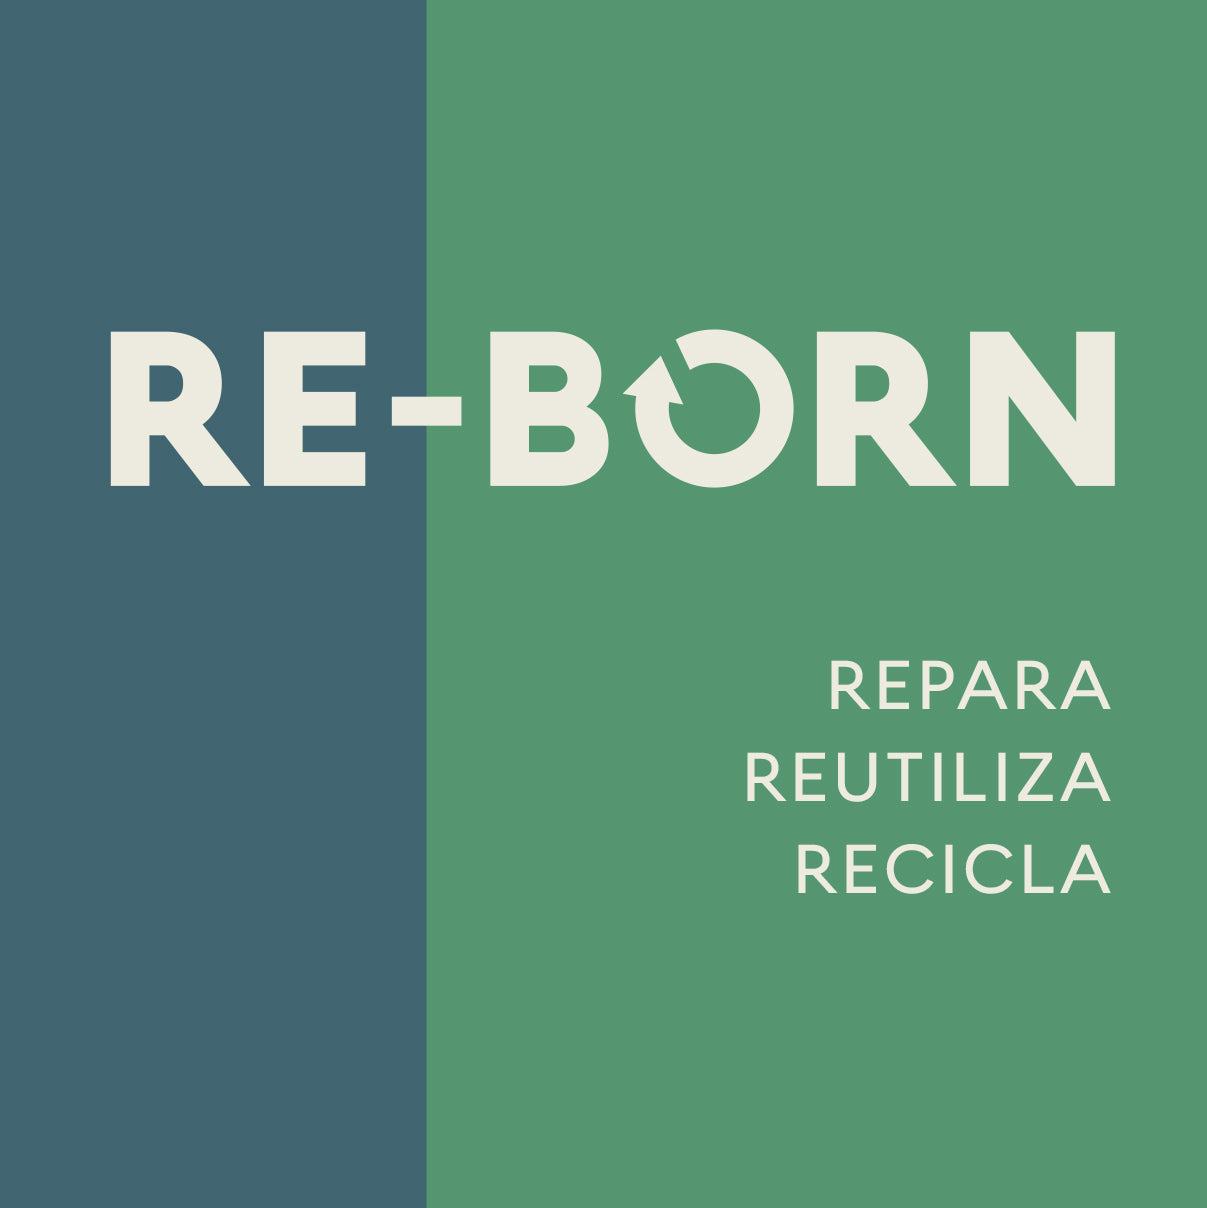 RE-BORN, Repara, Reutiliza, Recicla